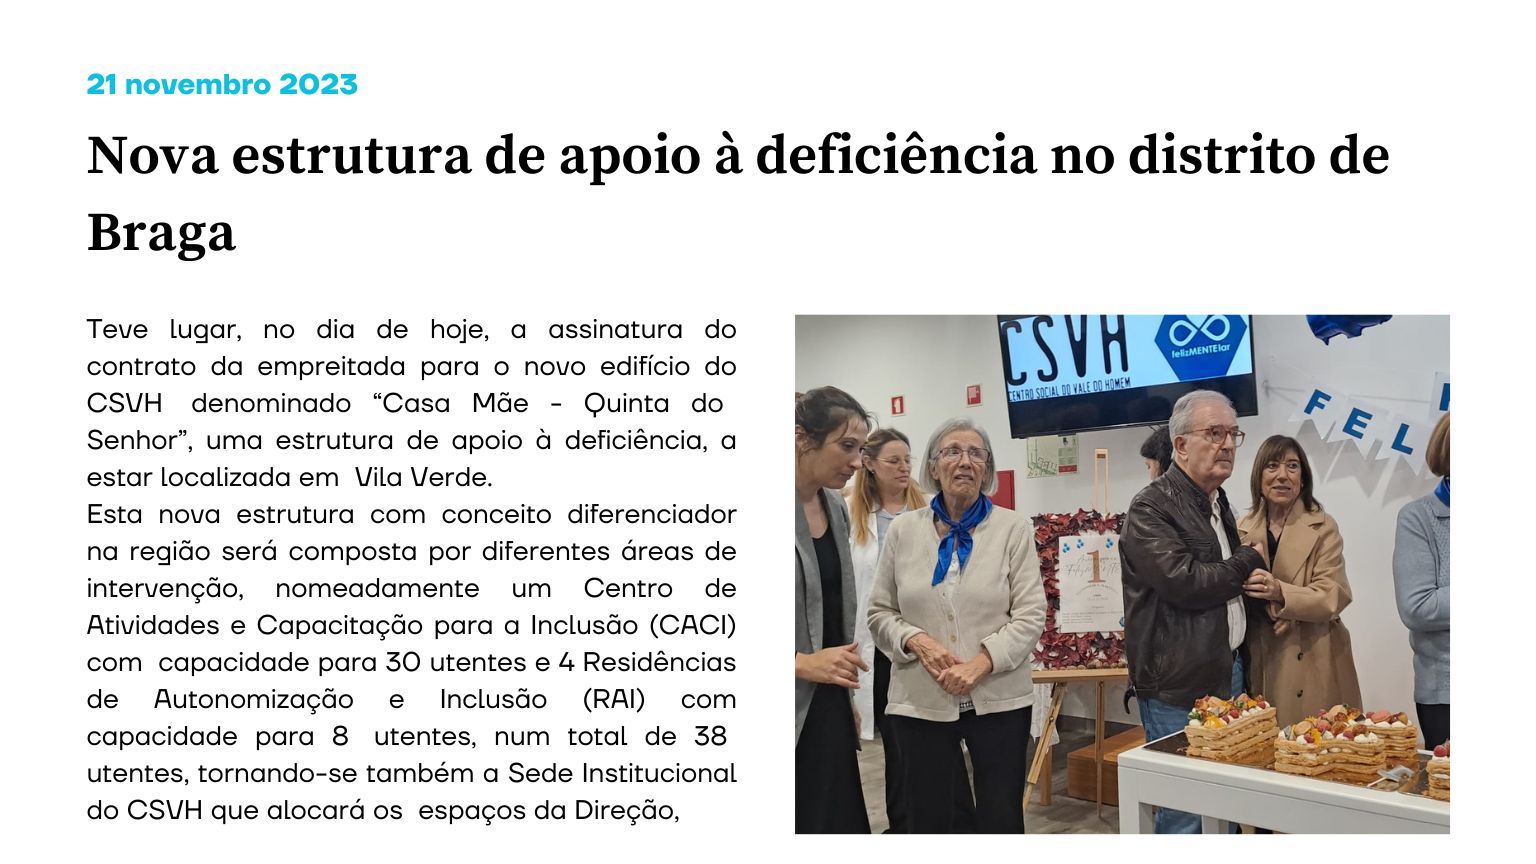 Nova estrutura de apoio à deficiência no distrito de Braga